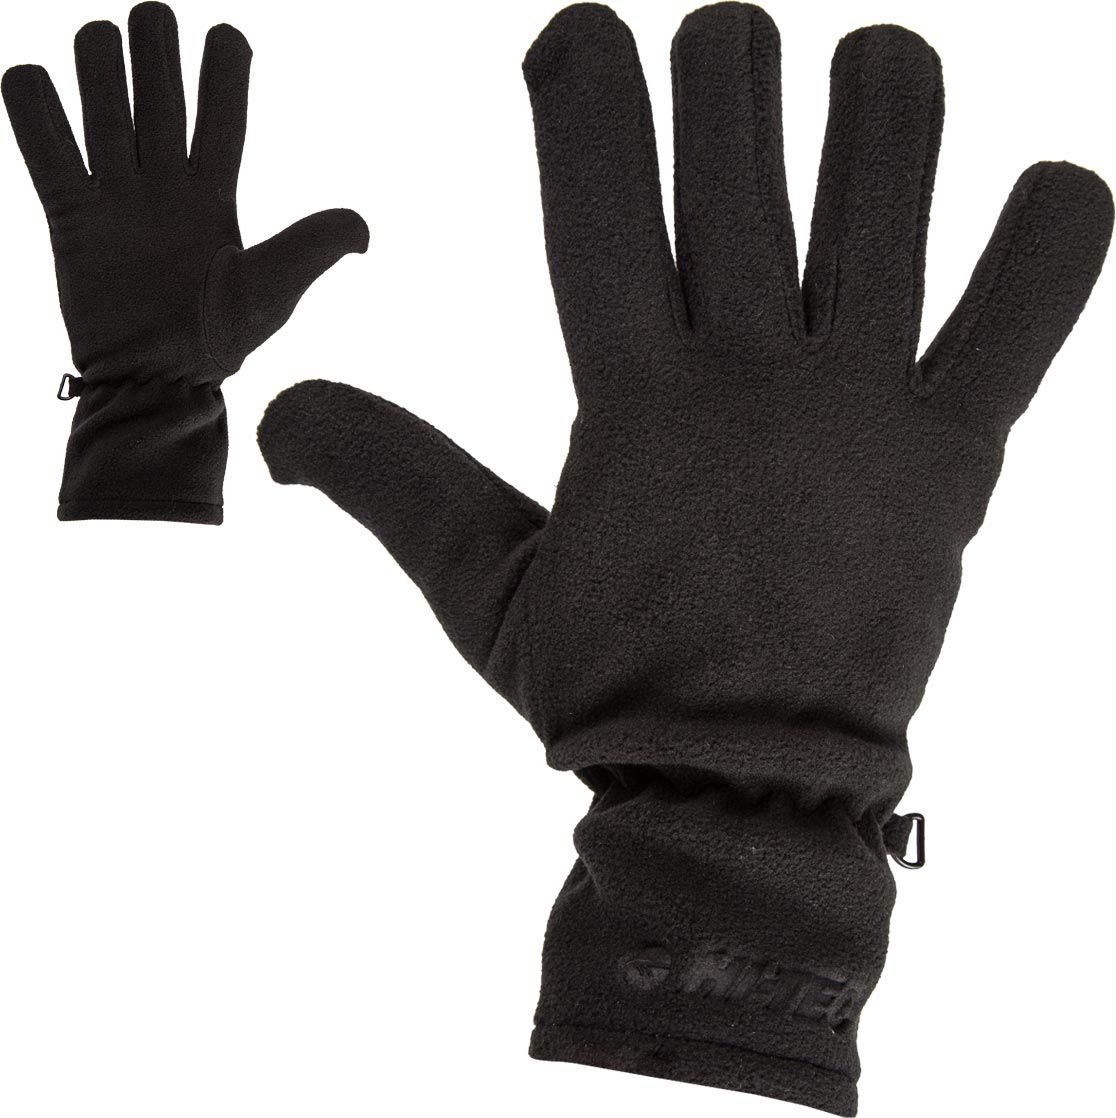 Mănuși de sex masculin Salmo negru r. L / XL